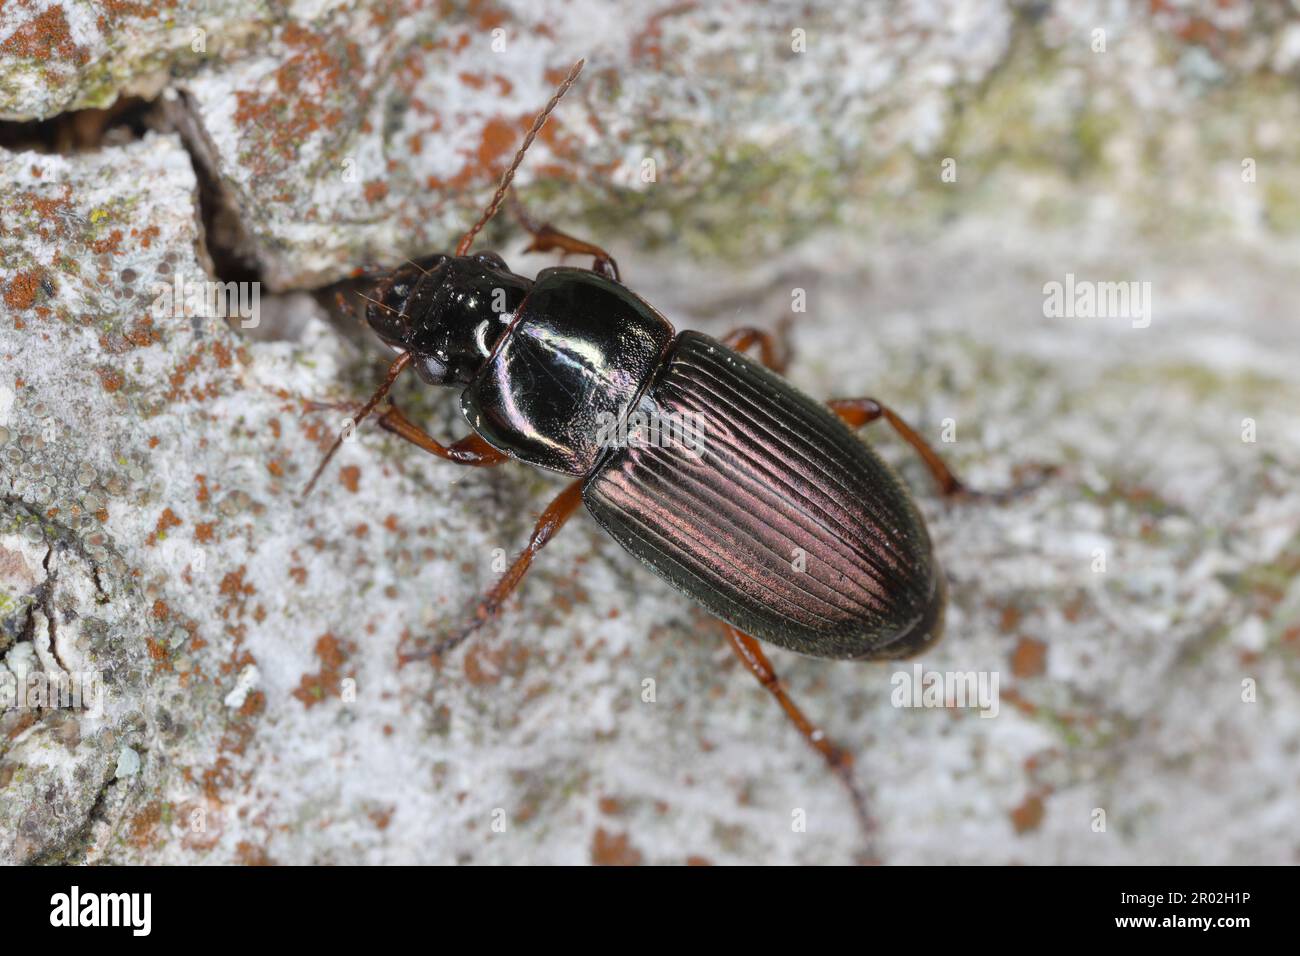 A ground beetle Harpalus sp. adult predatory beetle, apredator of small invertebrates on bark. Stock Photo